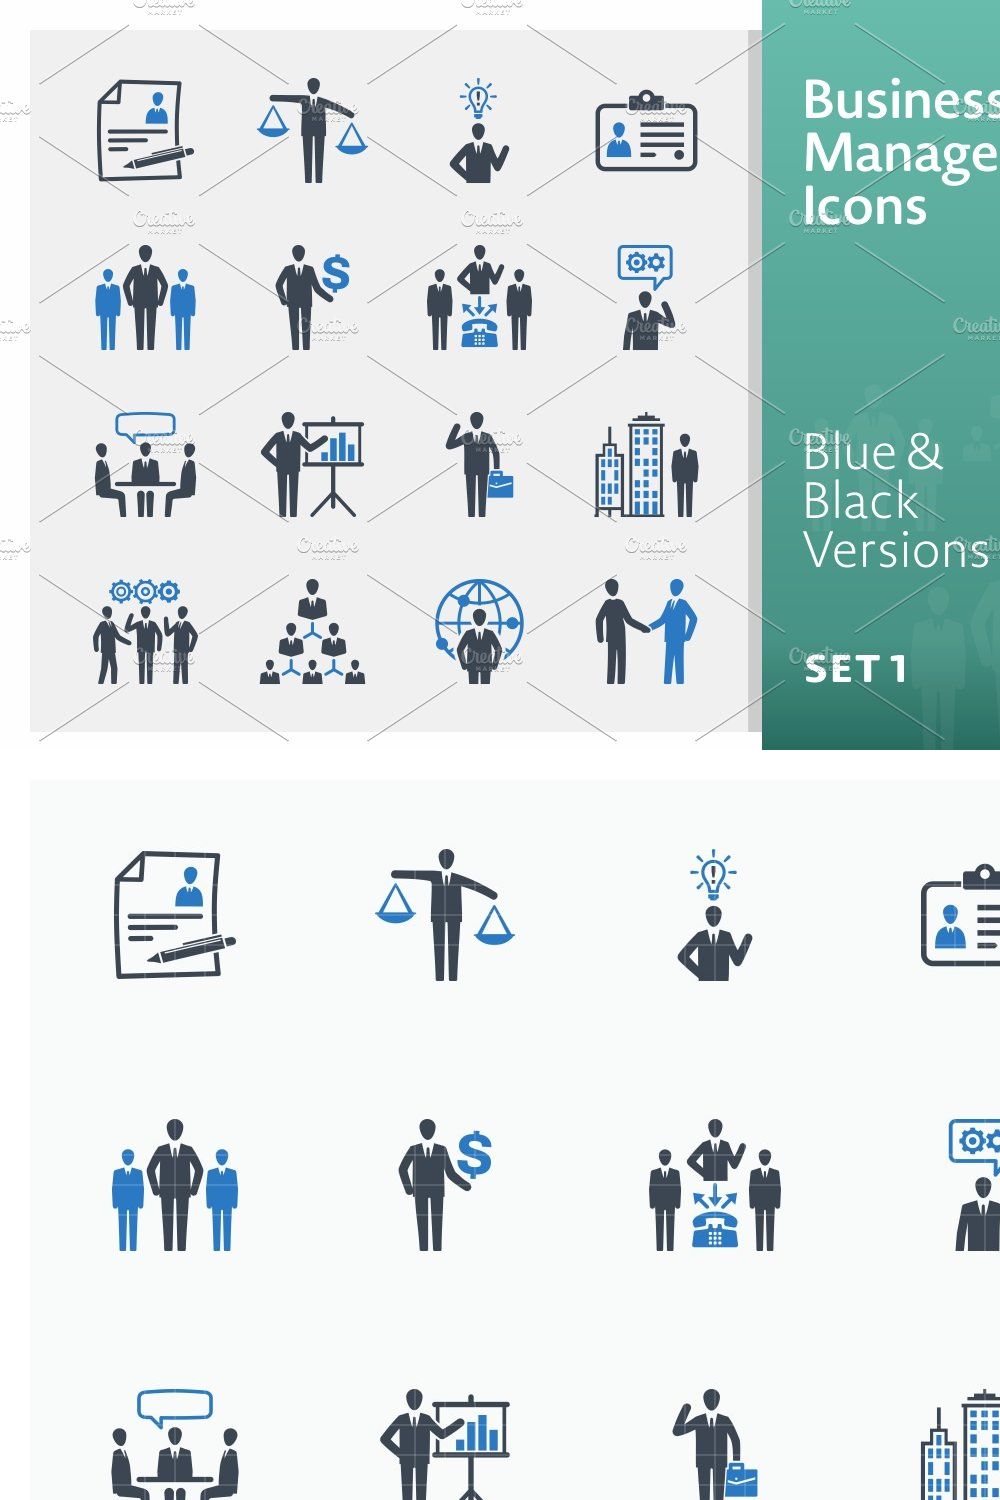 Business & Management Icons - Set 1 pinterest preview image.